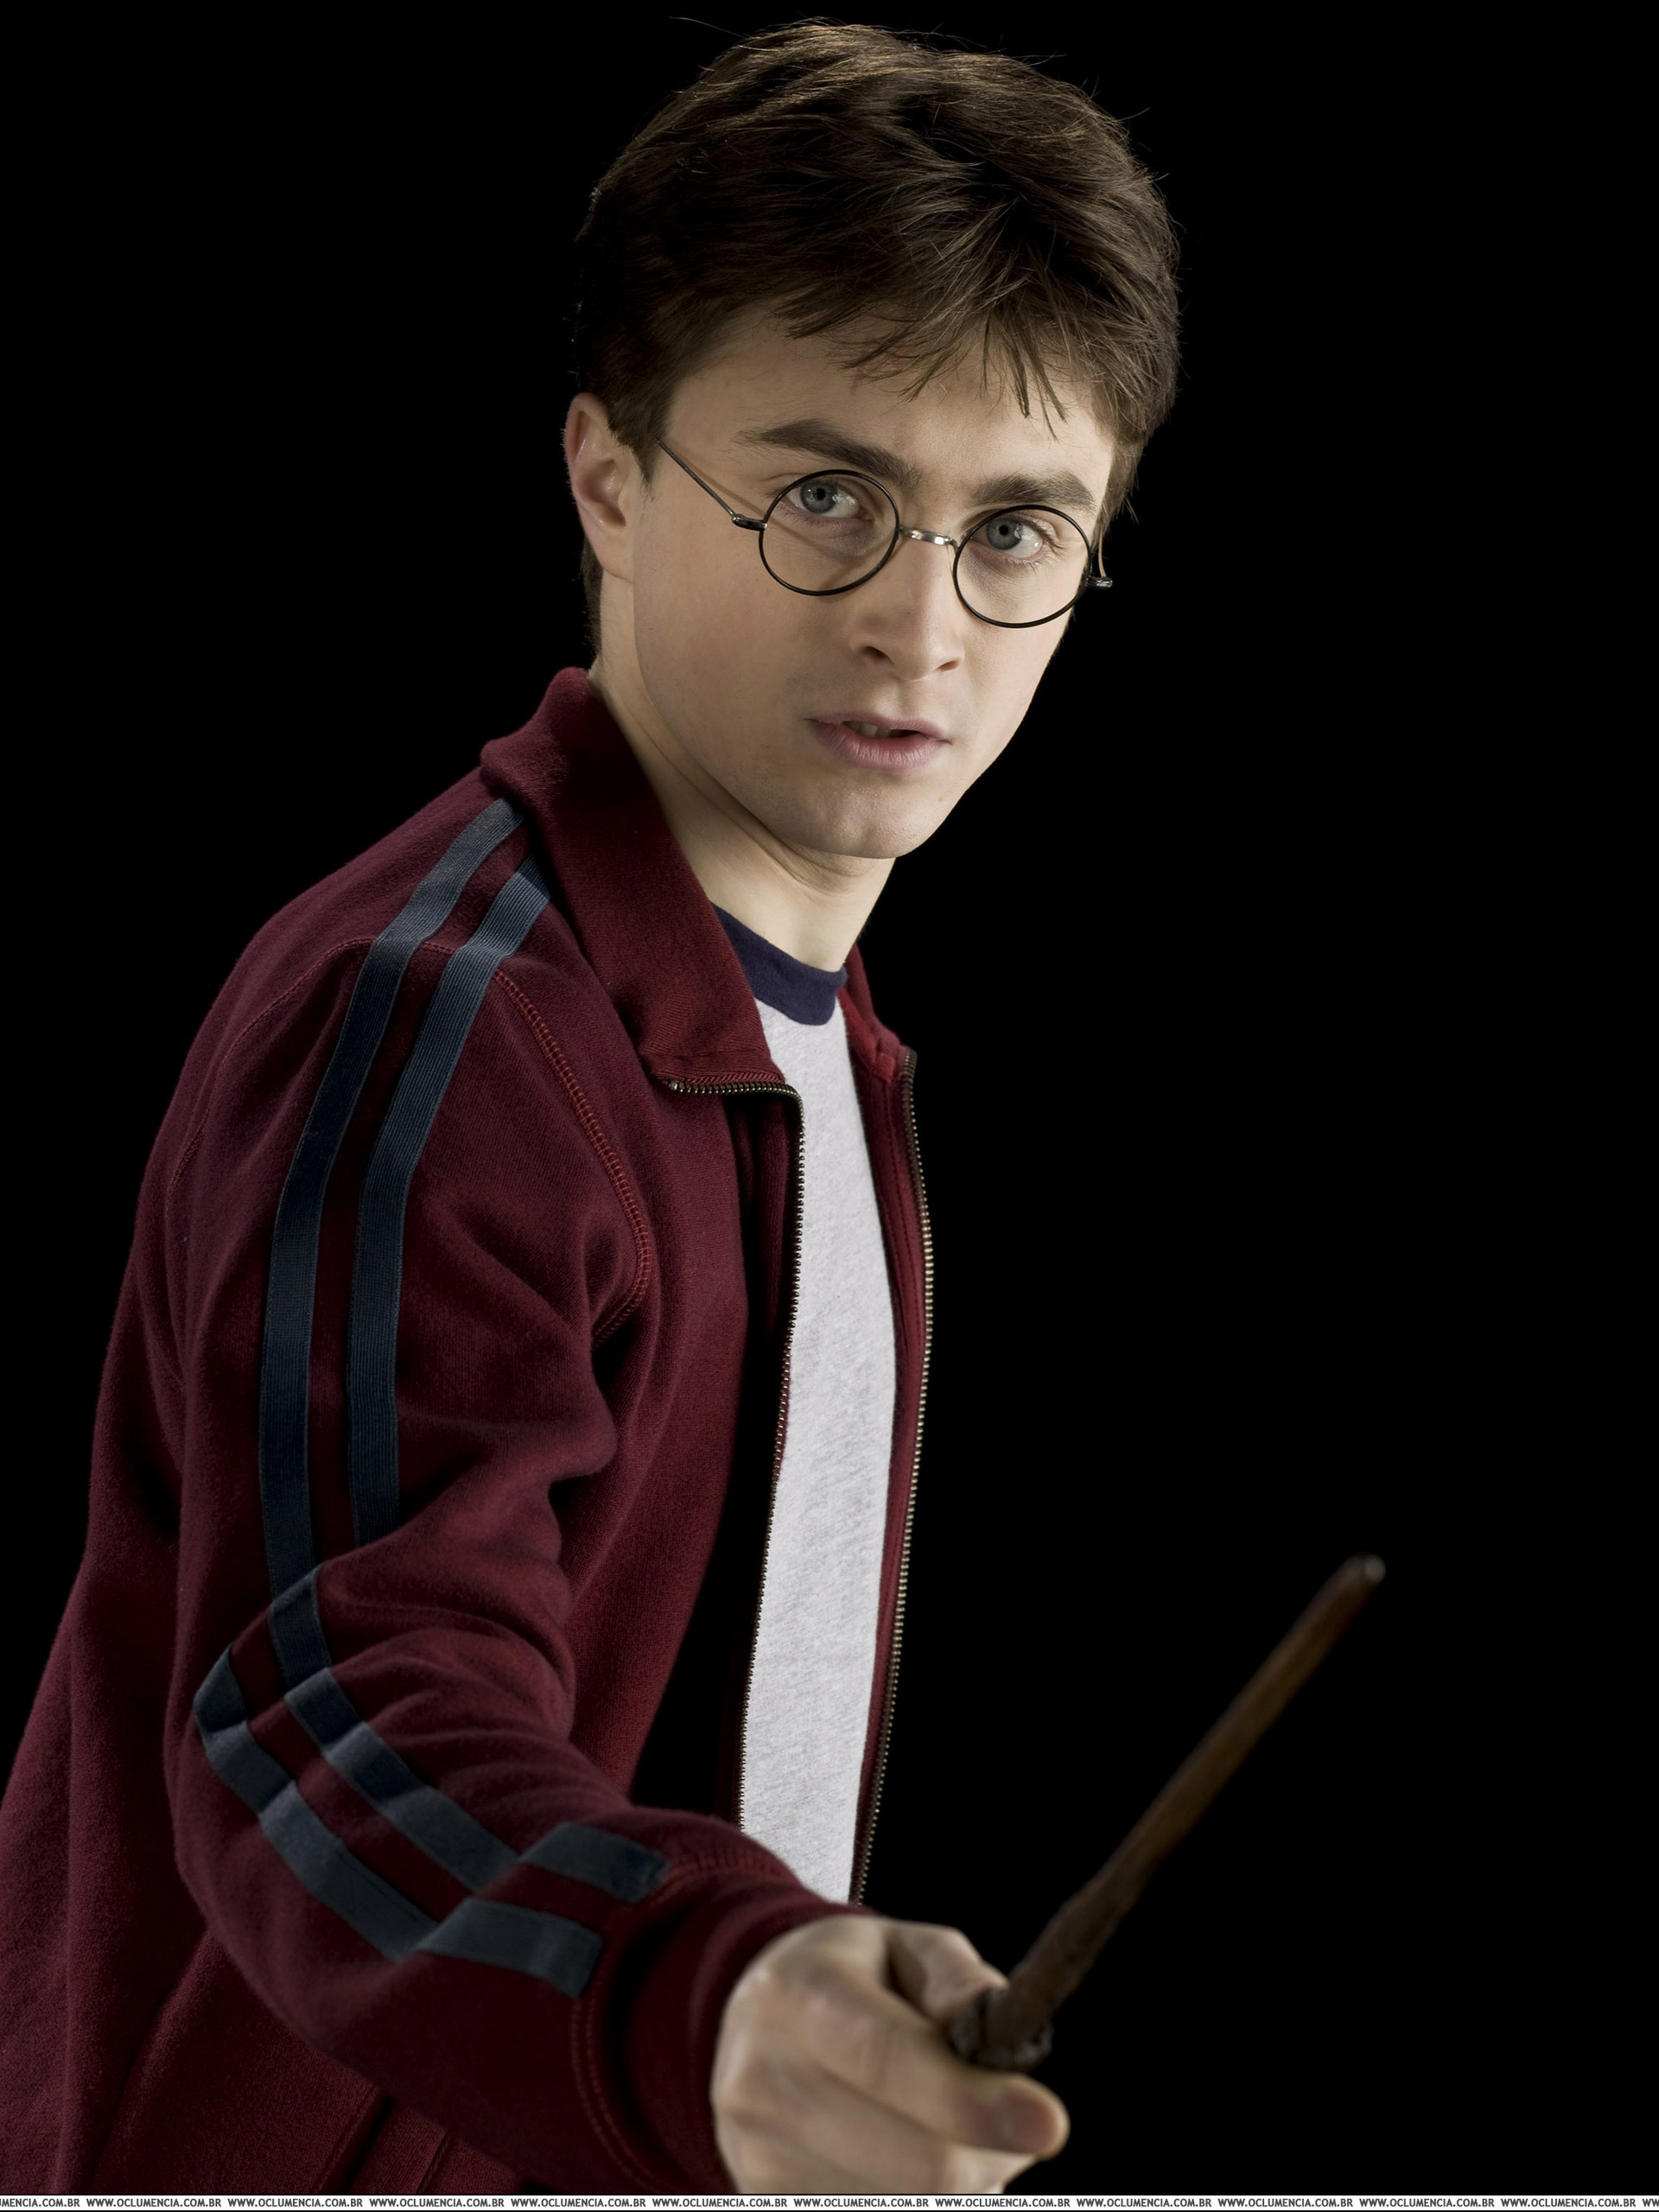 Ảnh Harry Potter đẹp trai